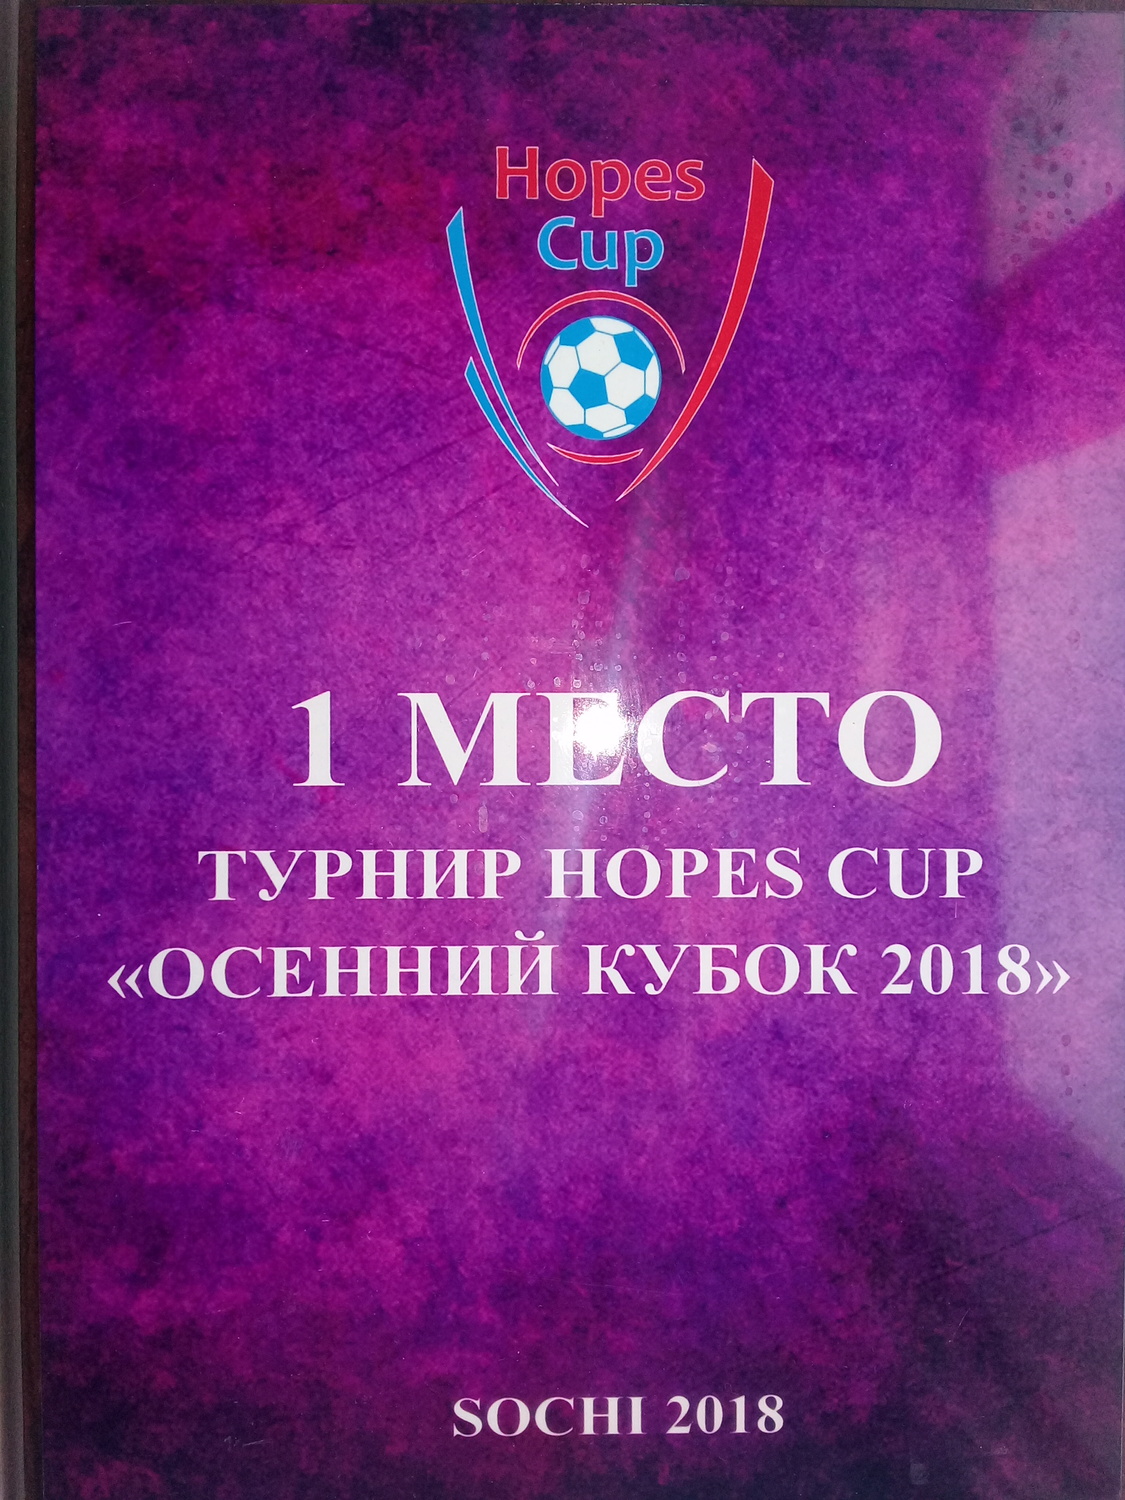 Турнир Hopes Cup "Осенний&nbsp; кубок 2018"<br>